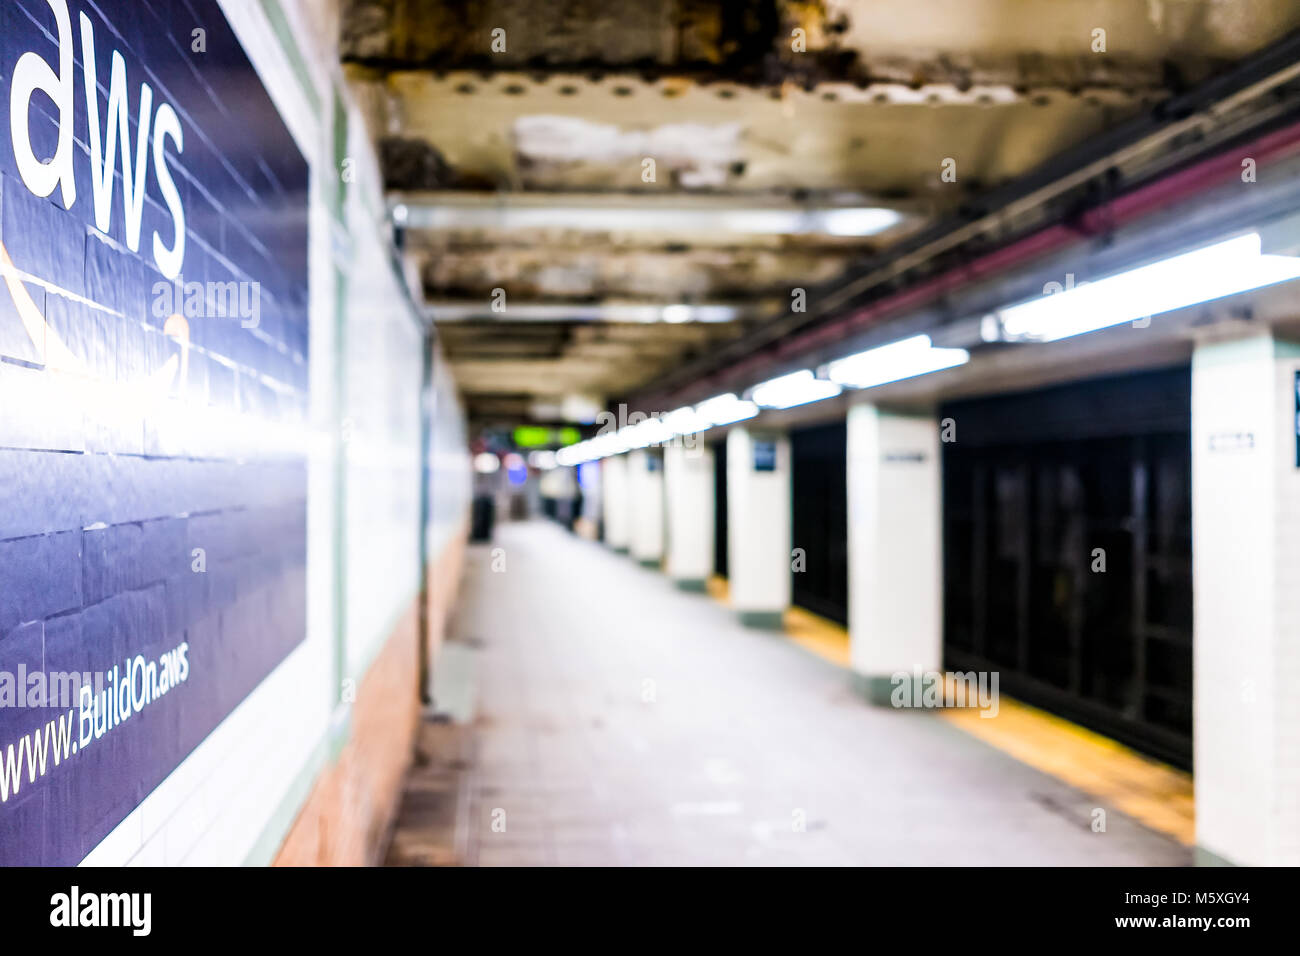 New York City, USA - October 30, 2017: Amazon Web Services AWS advertisement ad sign closeup in underground transit platform in NYC Subway Station, wa Stock Photo